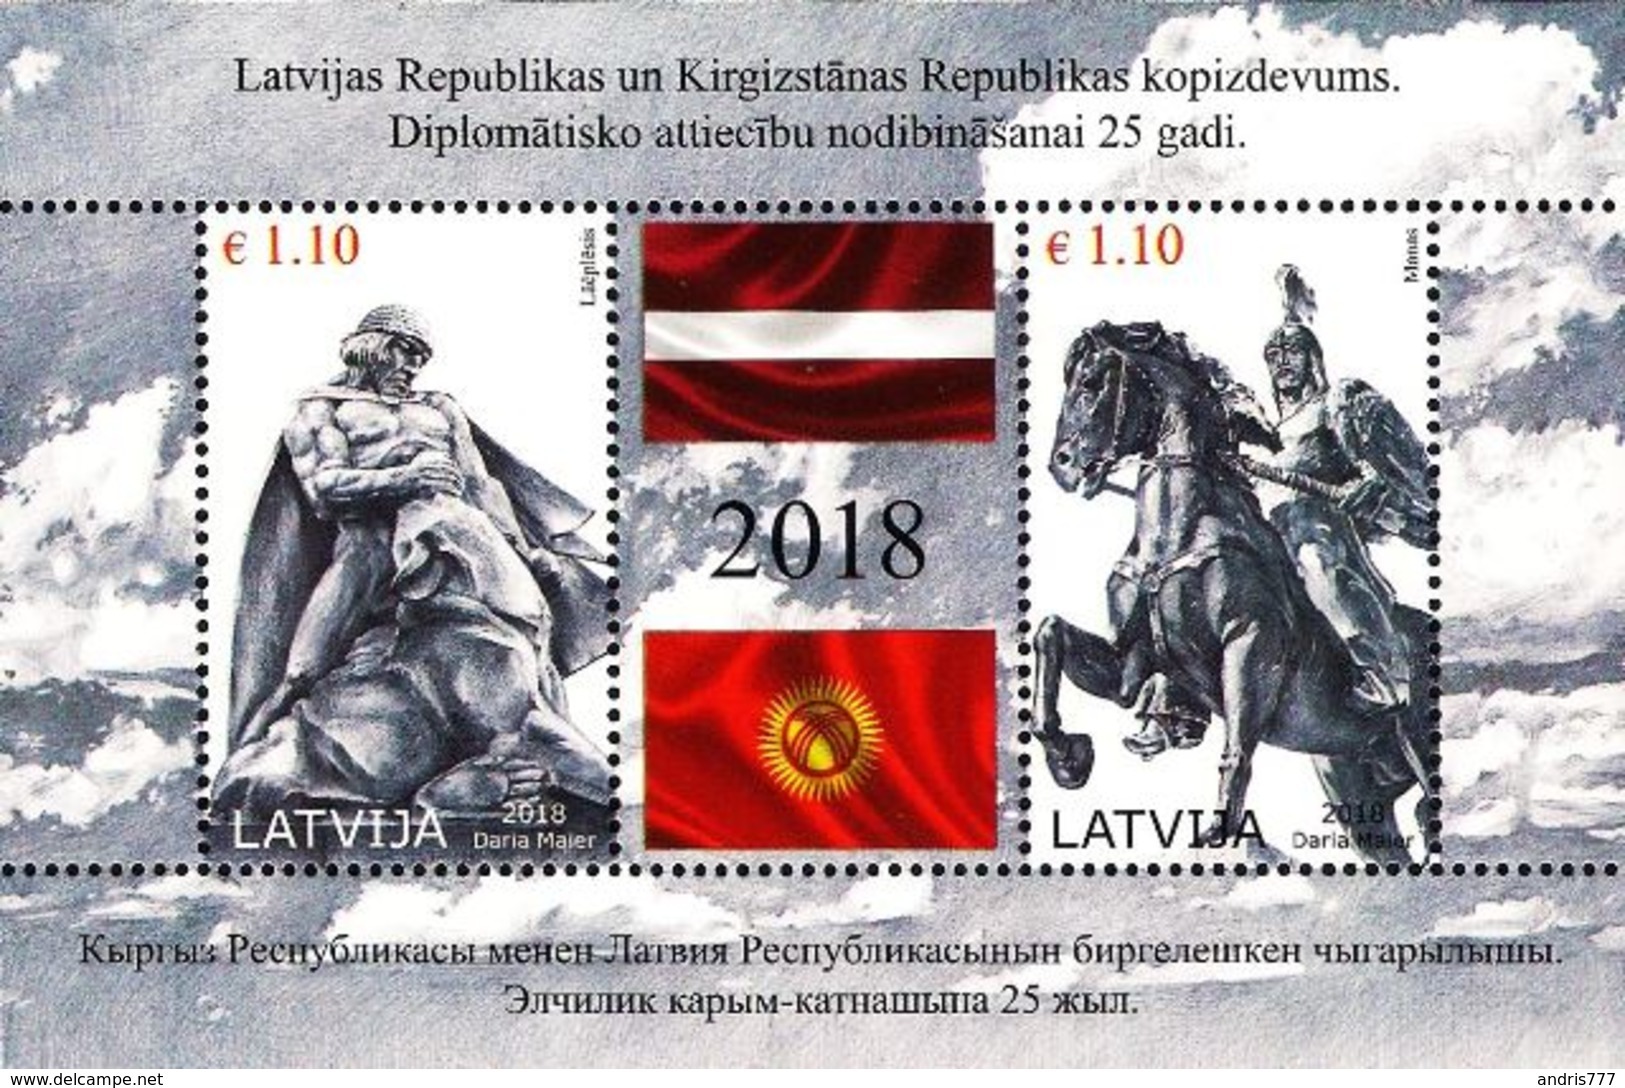 Latvia Lettland Lettonie 2018 (14) Latvia - Kyrgyzstan Joint Issue - National Heroes - Lacplesis - Manas - National Flag - Latvia